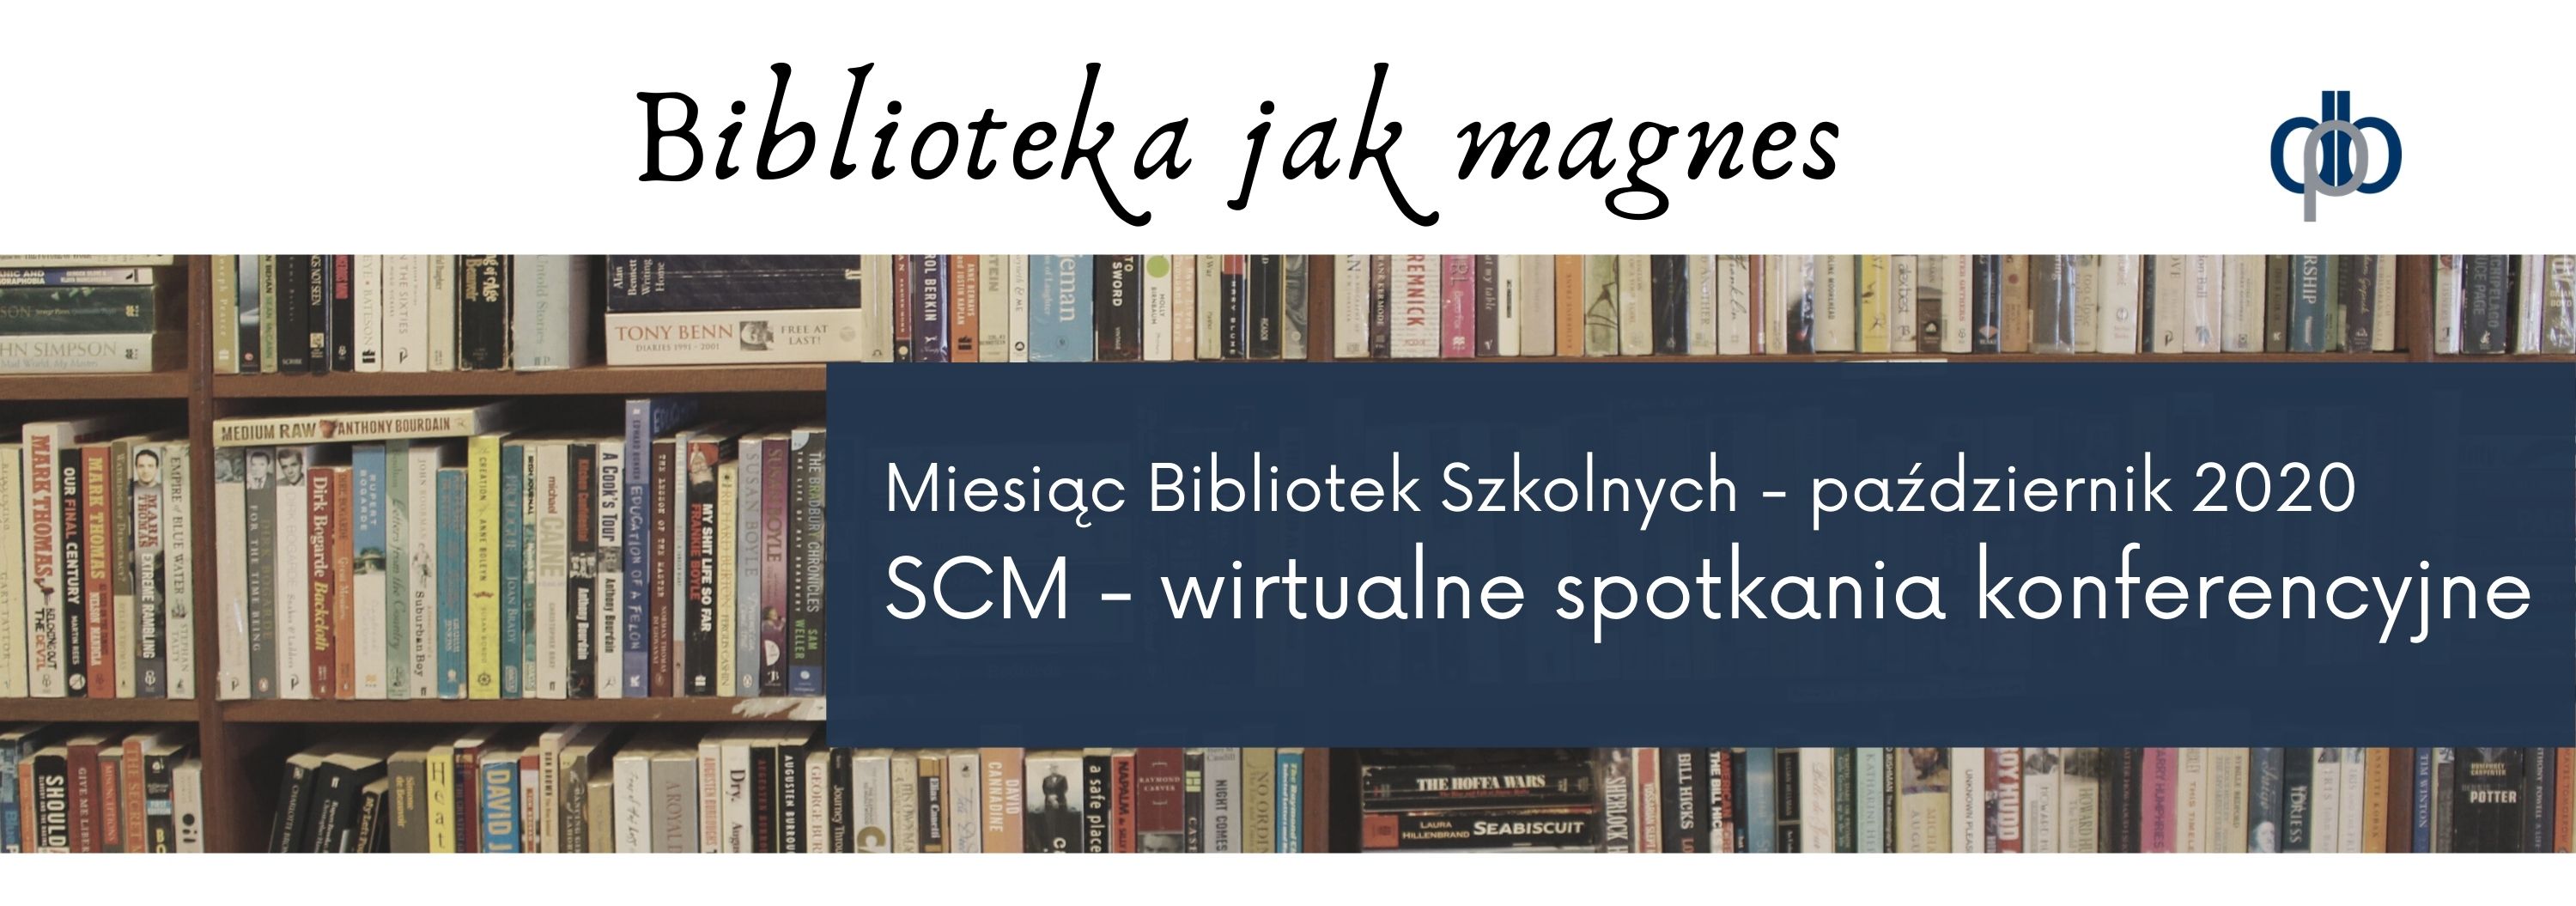 Konferencja SCM-Biblioteka jak magnes